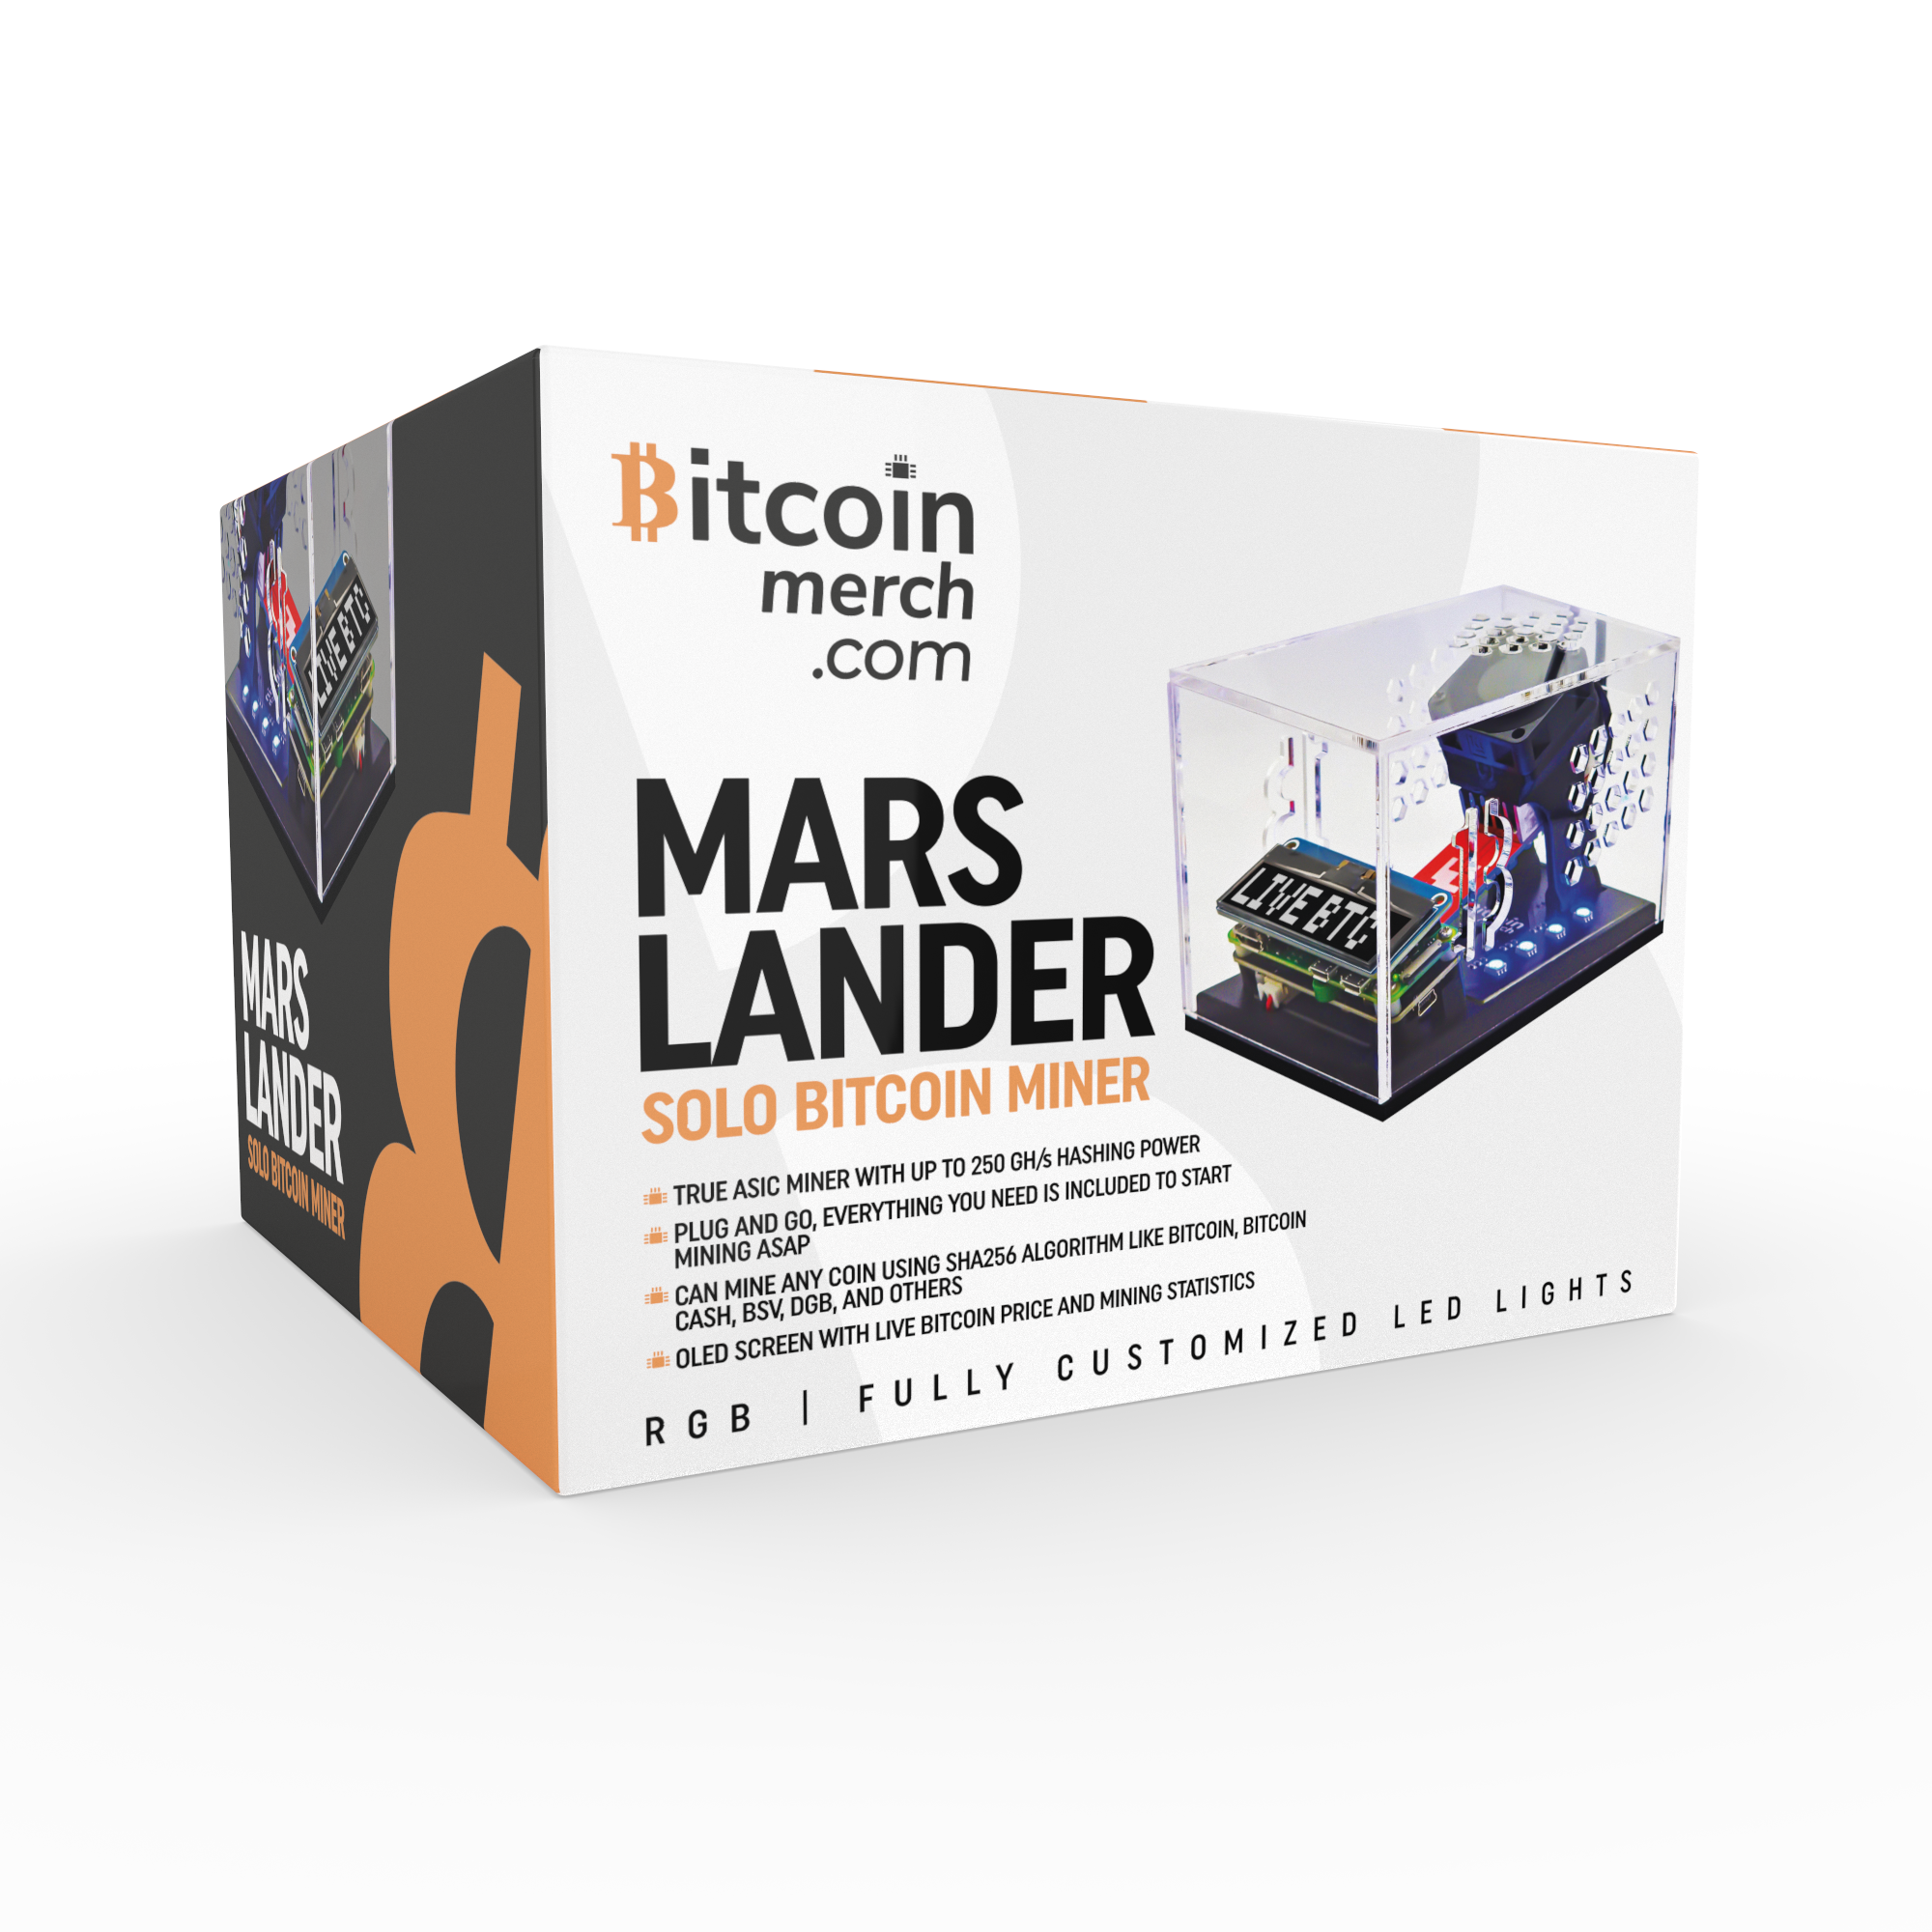 Bitcoin Merch® MARS LANDER V2 Solo Bitcoin Miner - Up to 250GH/s